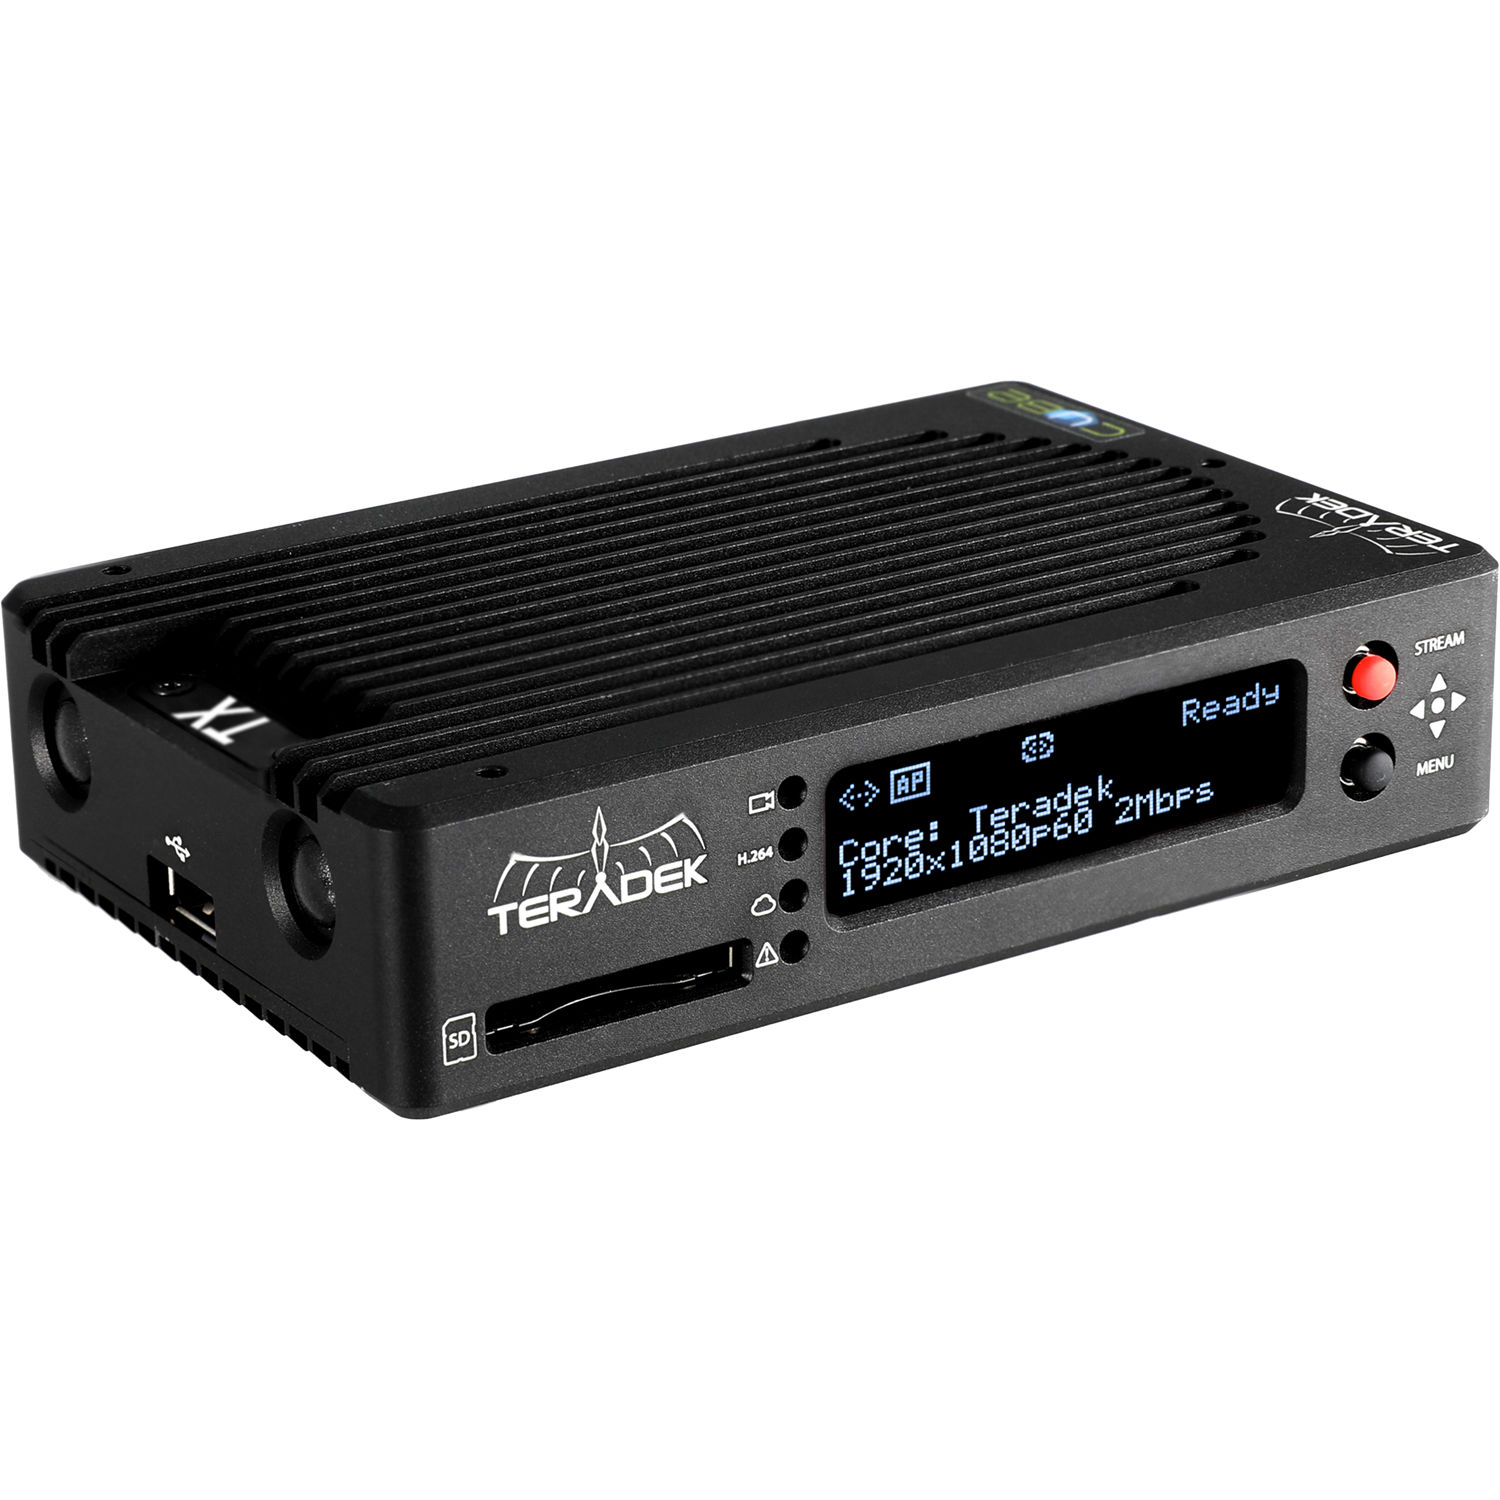 Cube 705 HEVC/AVC Encoder SDI/HDMI GbE USB